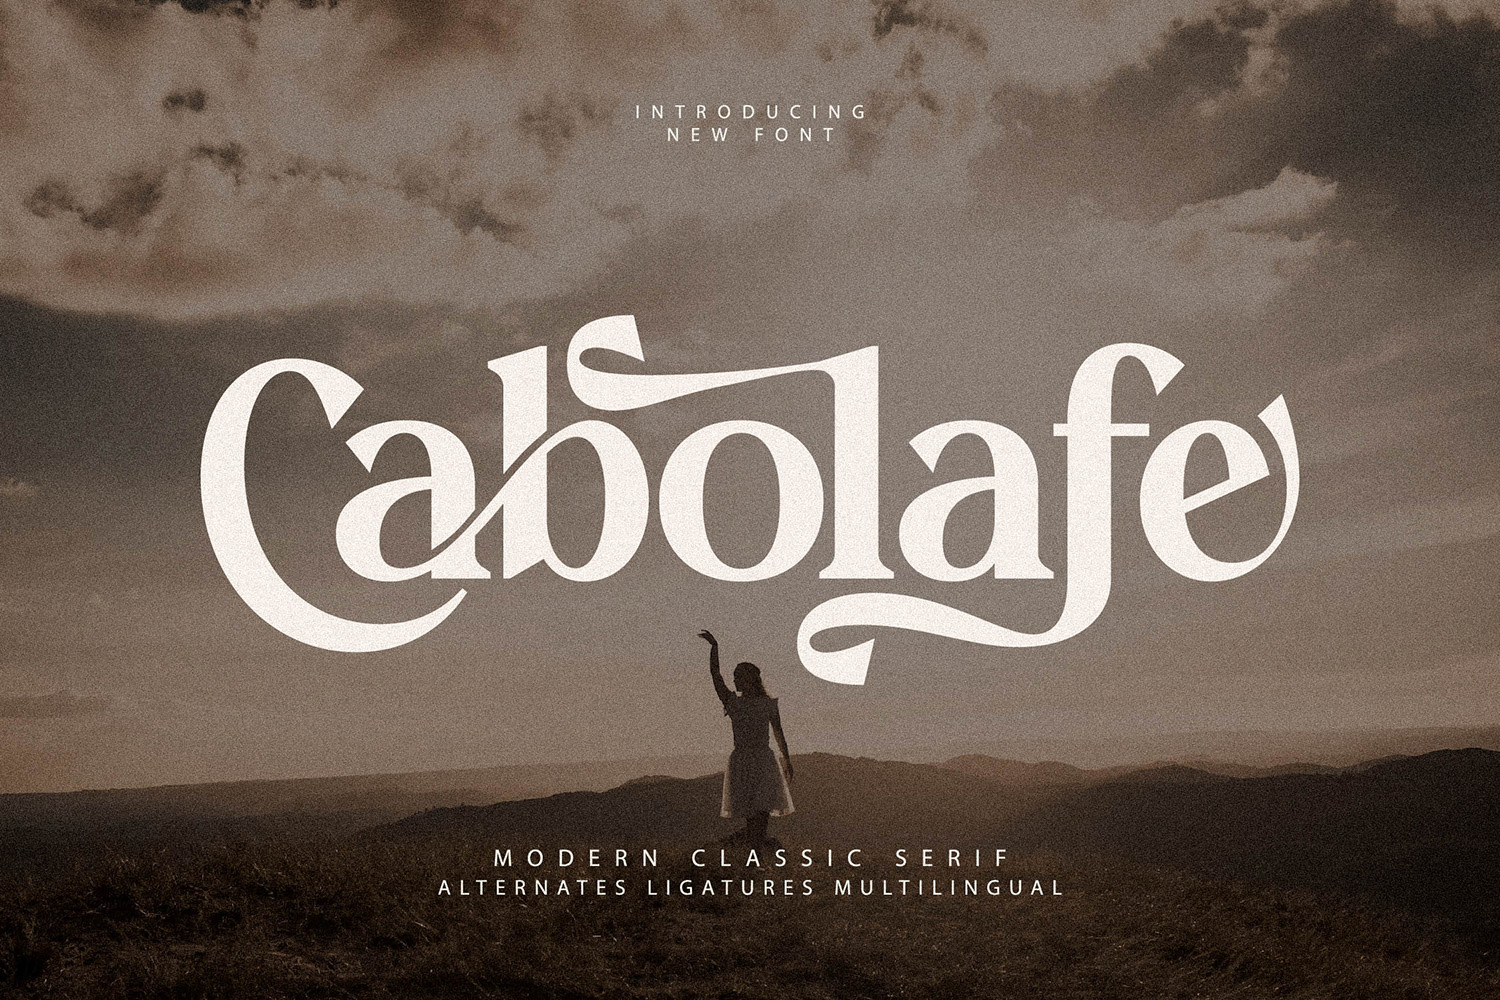 Cabolafe Free Font